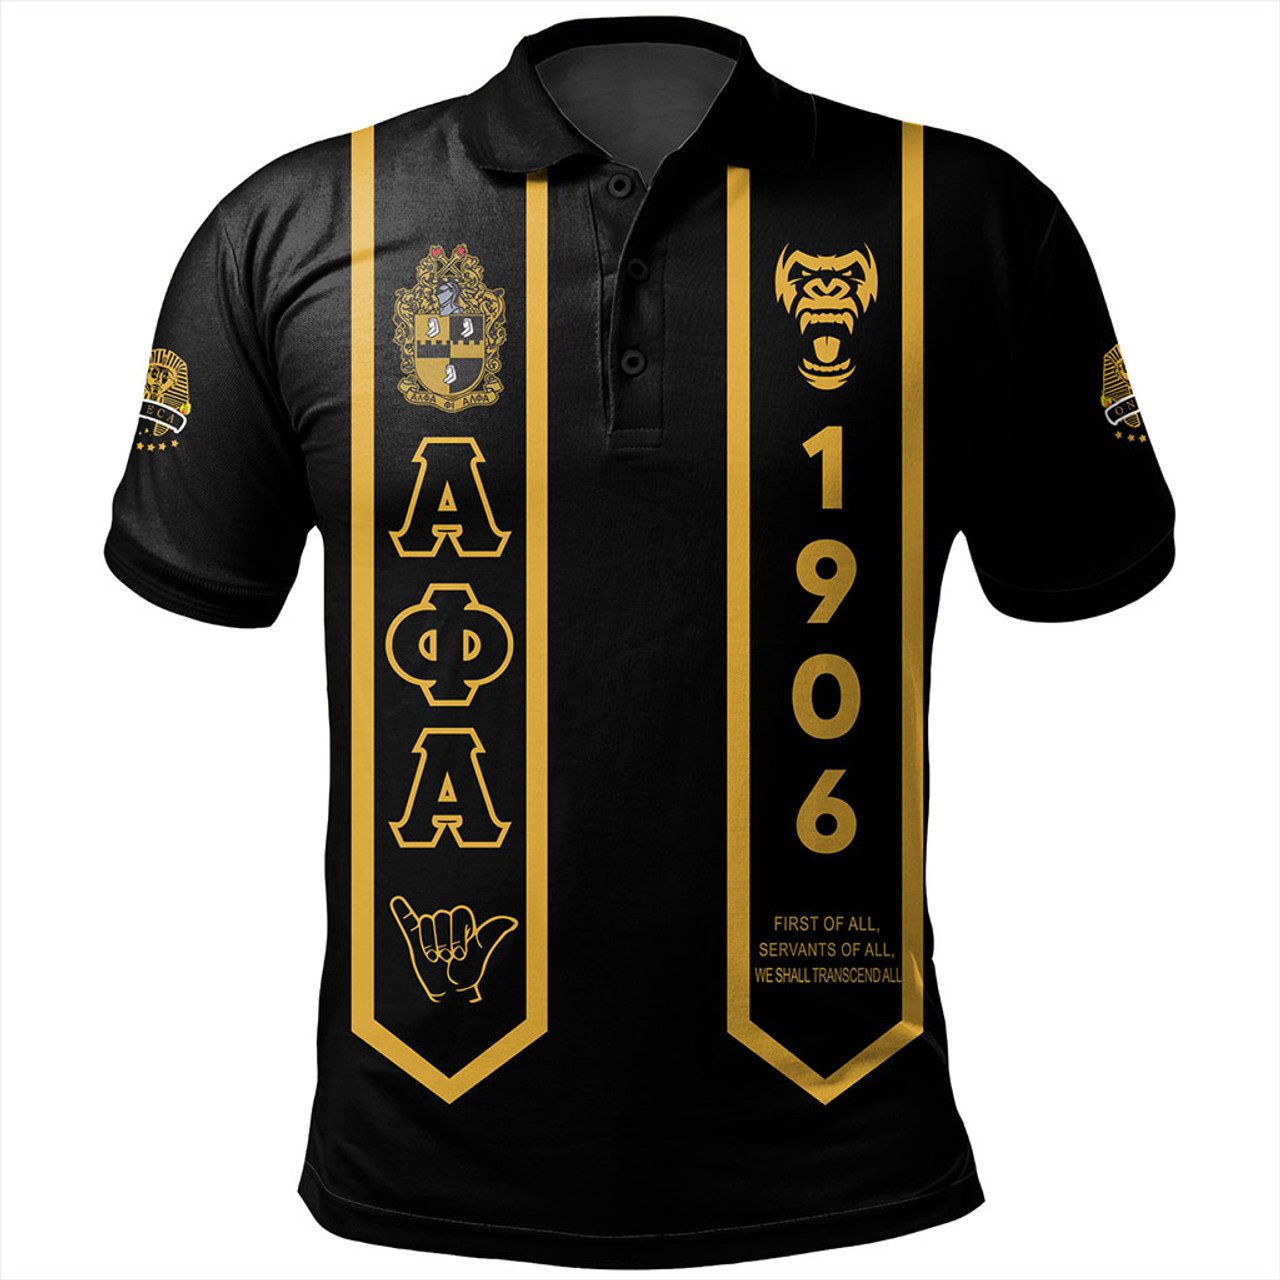 Alpha Phi Alpha Polo Shirt Greek Gradution